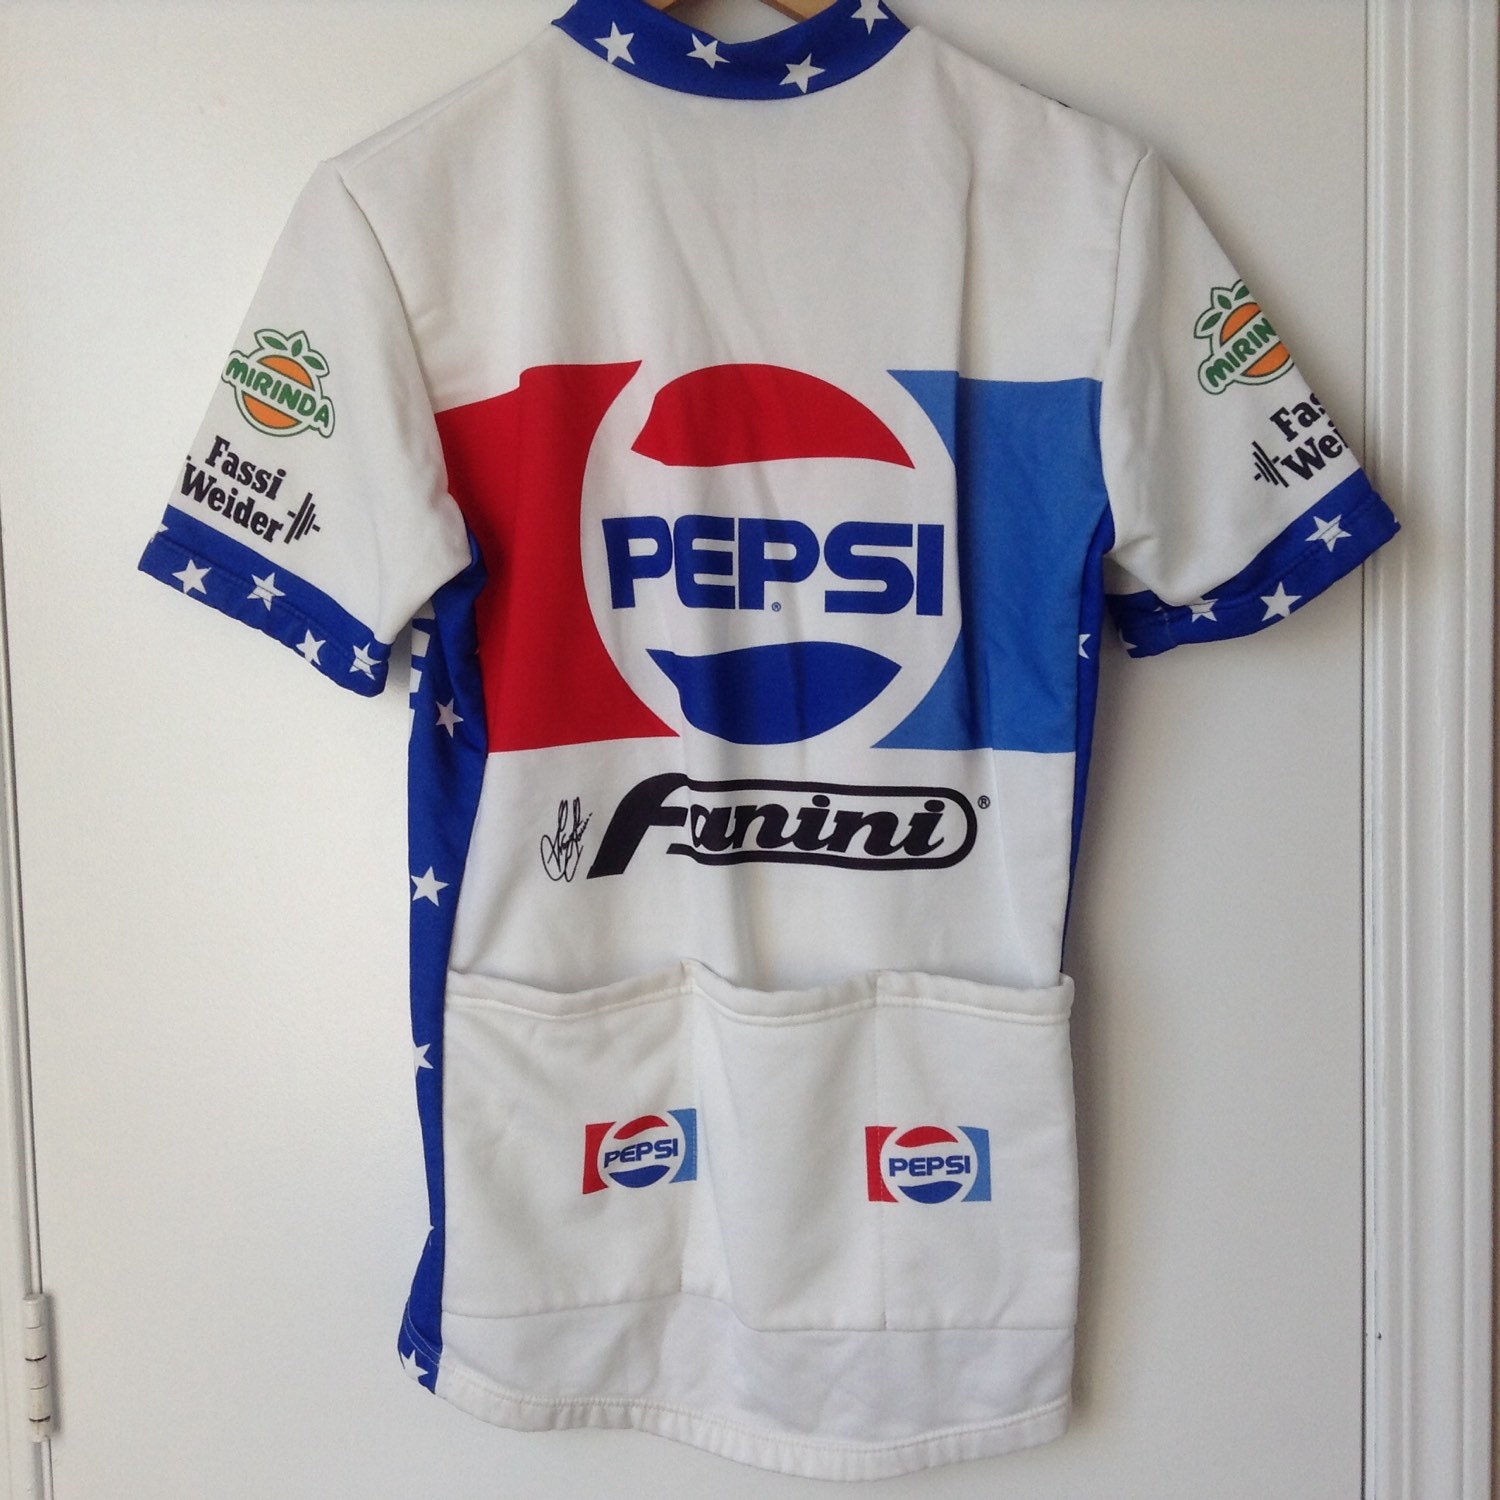 Vintage tee 80's Cycling shirts PEPSI classic logo | Etsy